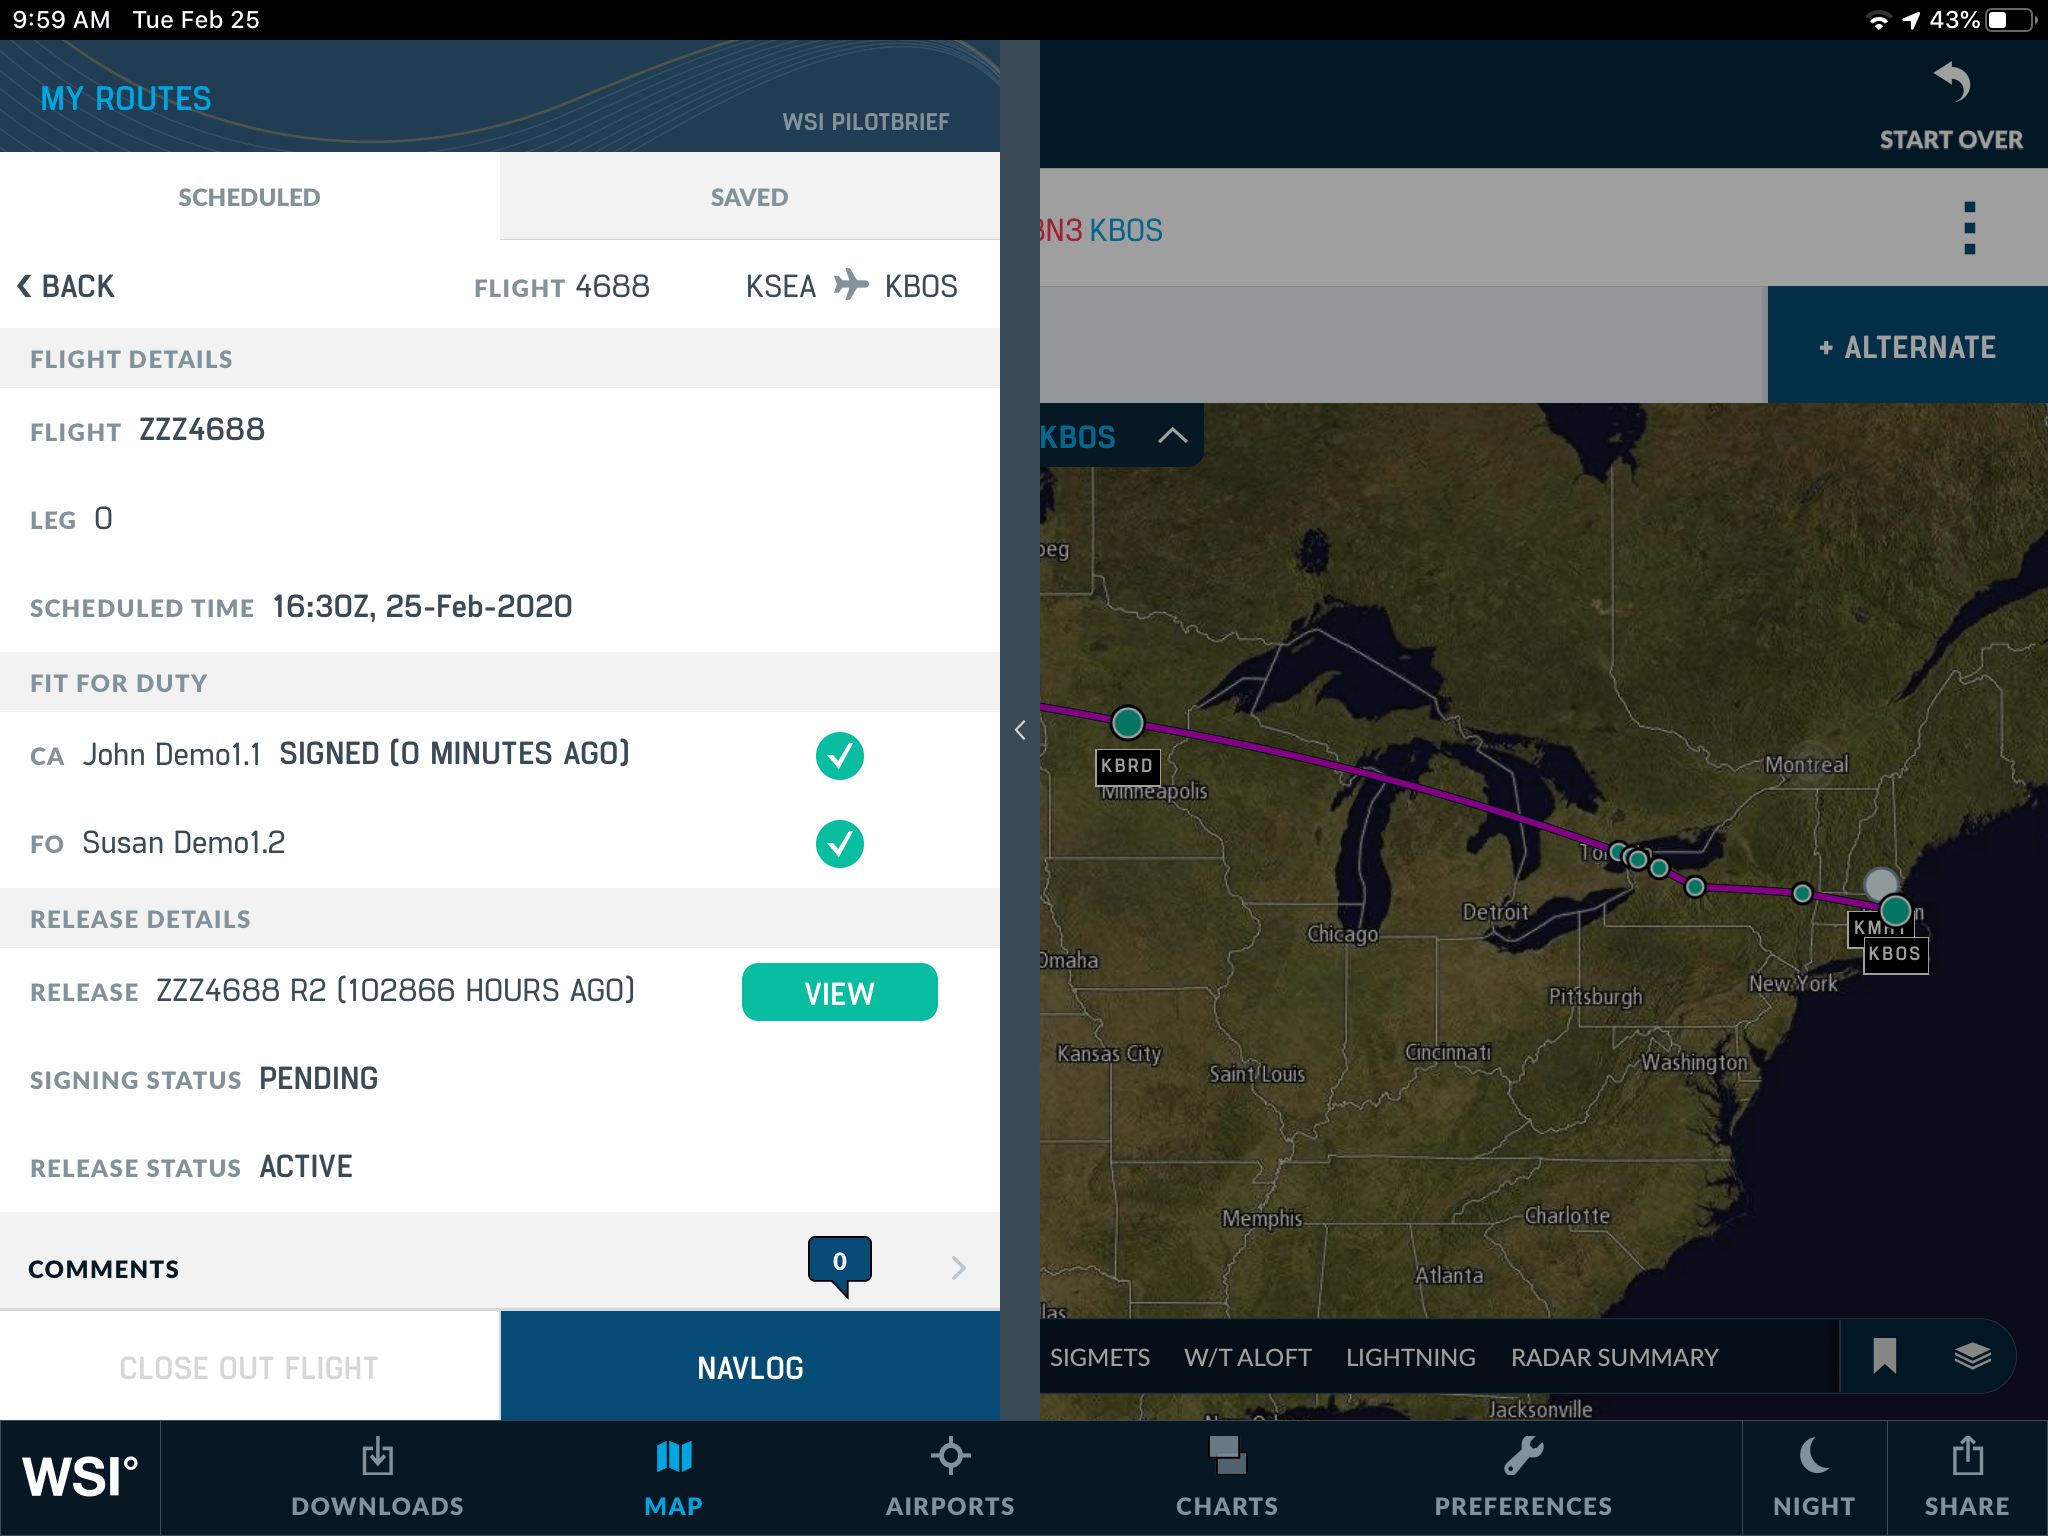 An overview of the flight plan map